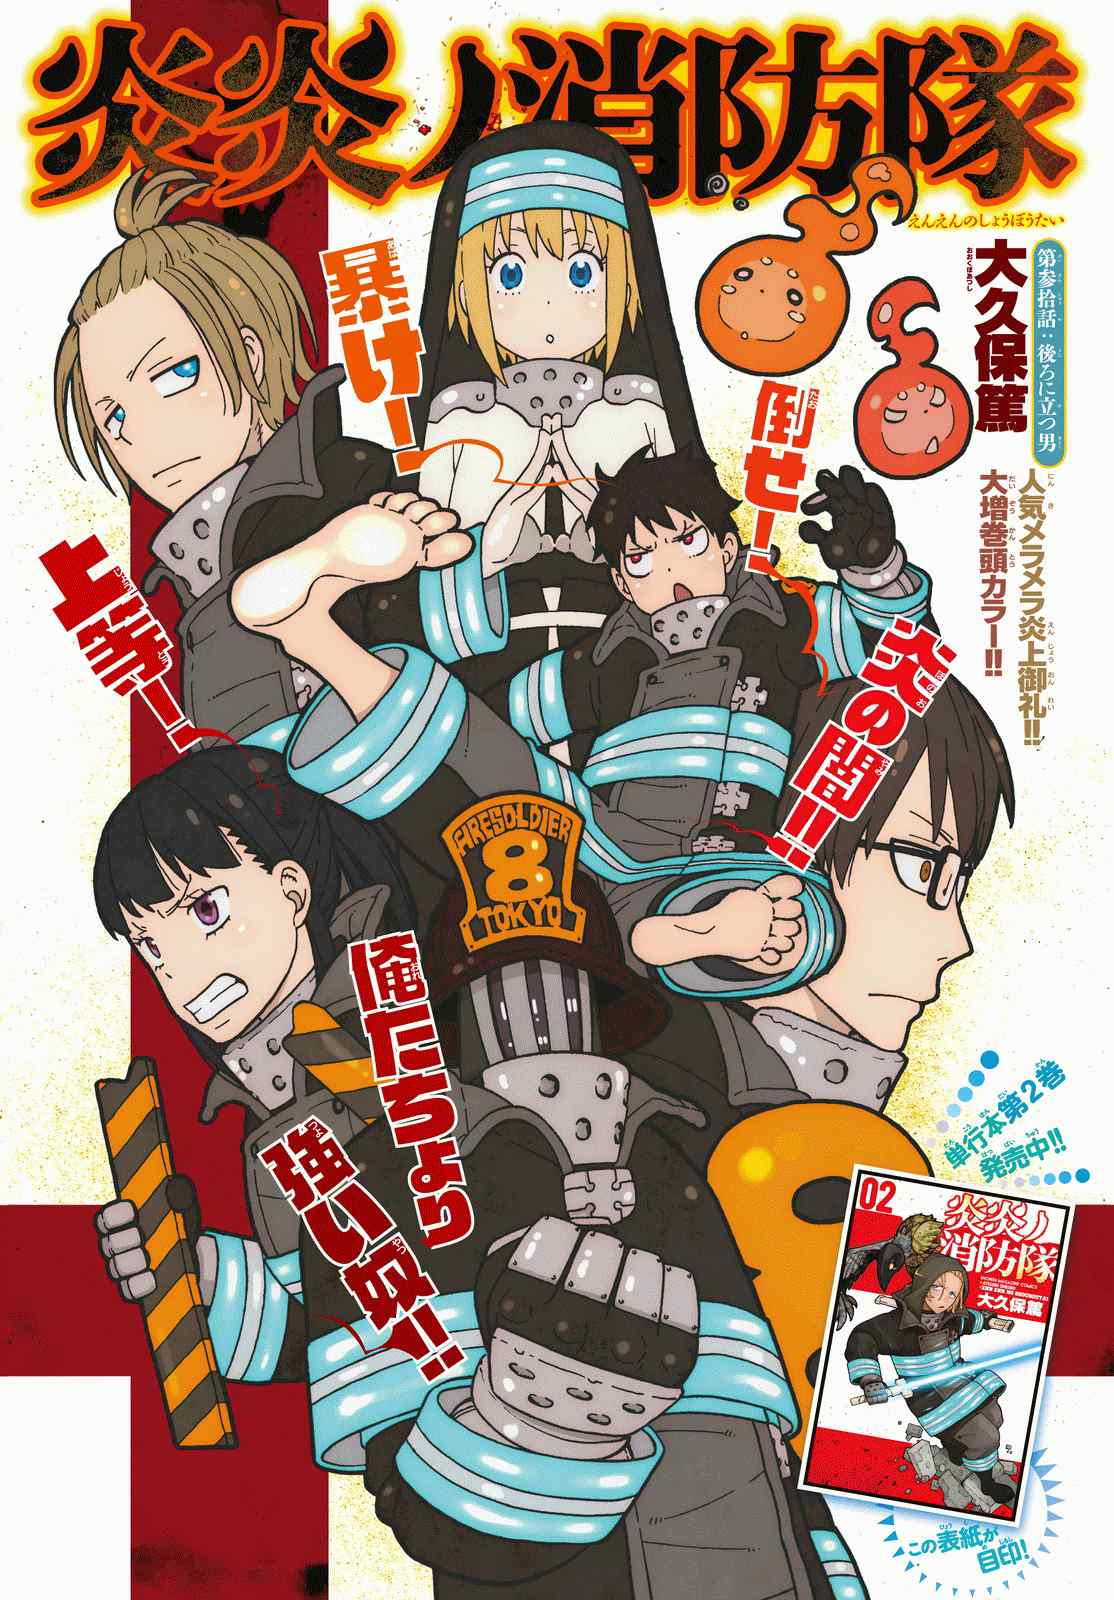 Fire Force Manga Volume 29